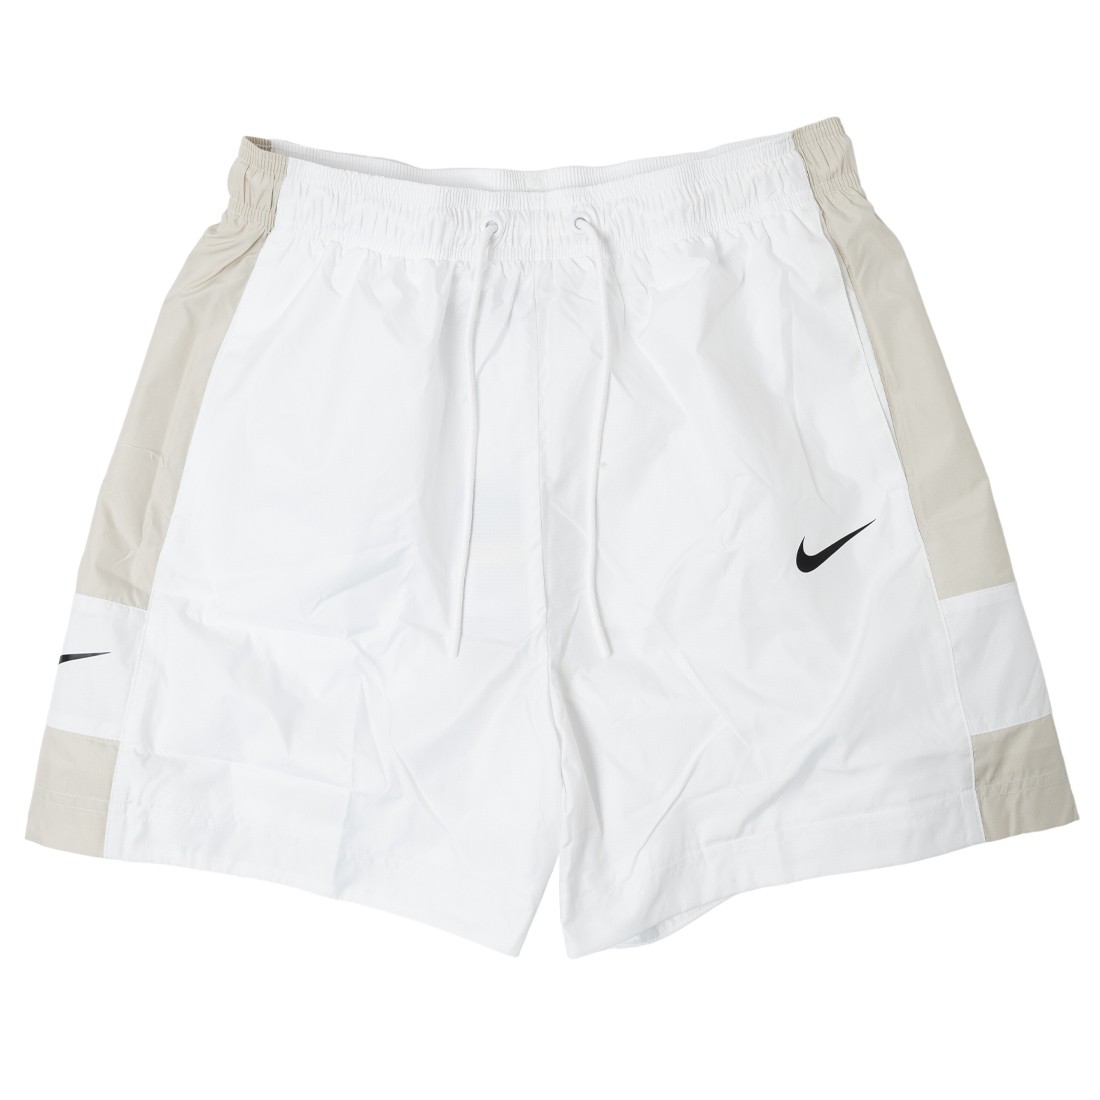 Nike Women Sportswear Shorts (white / light bone / black)